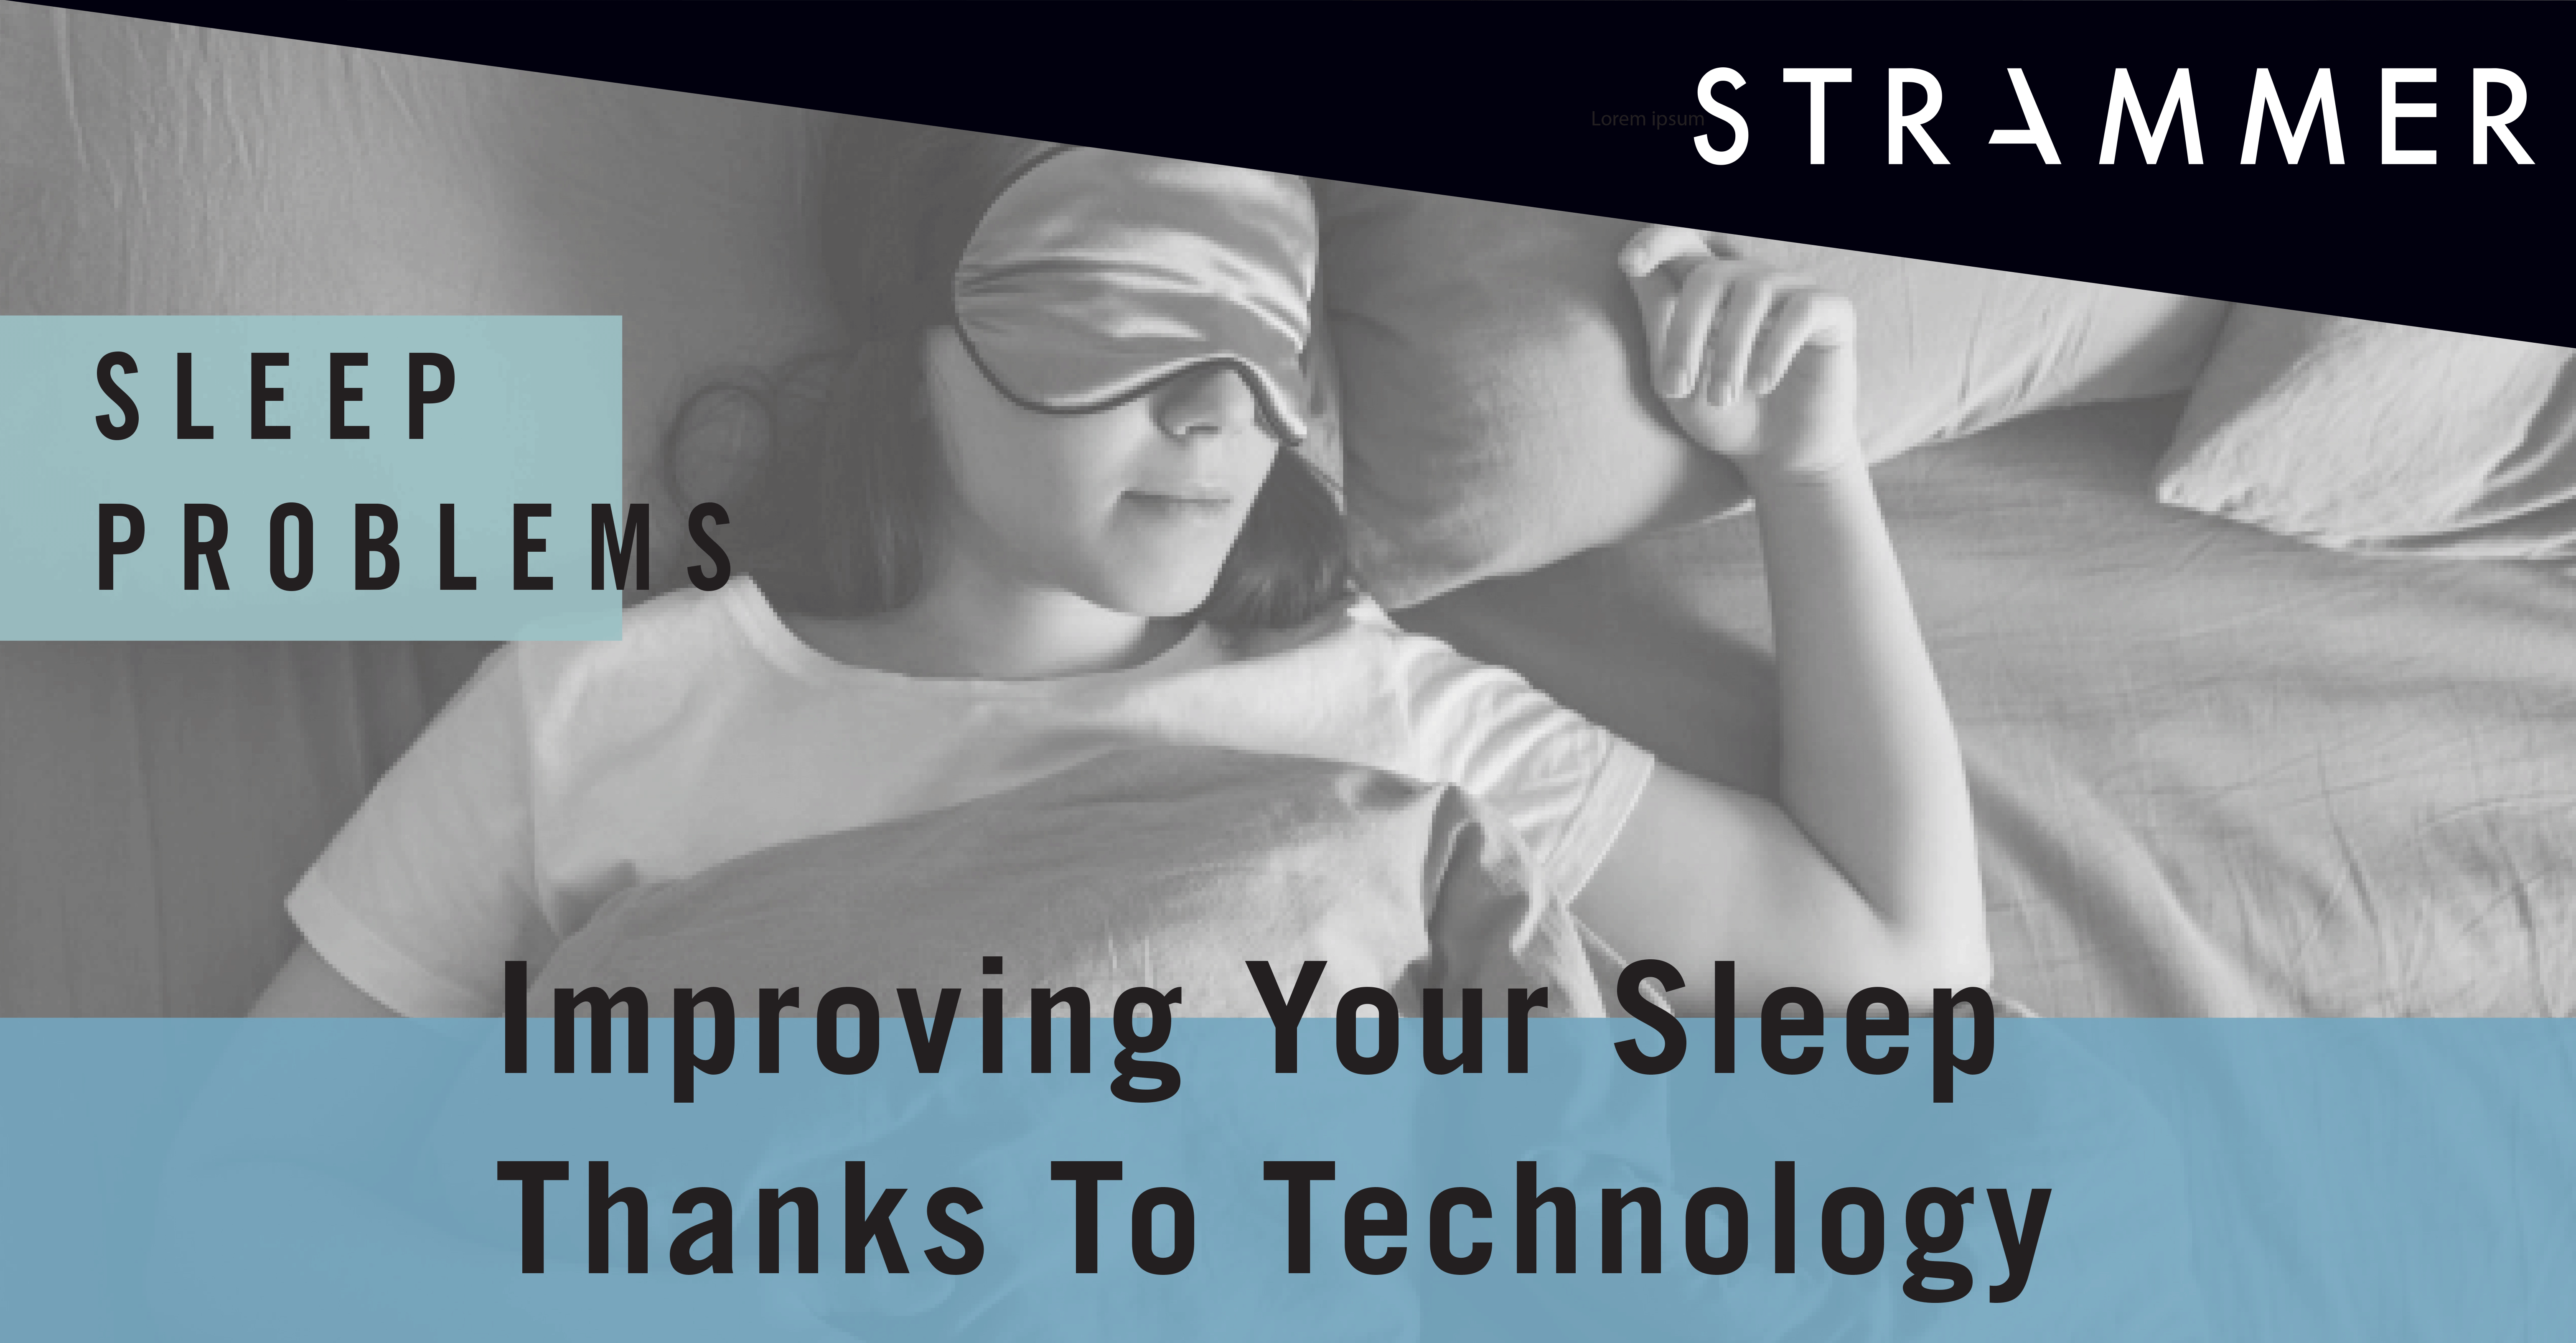 Improve Sleep With the Latest New Technology